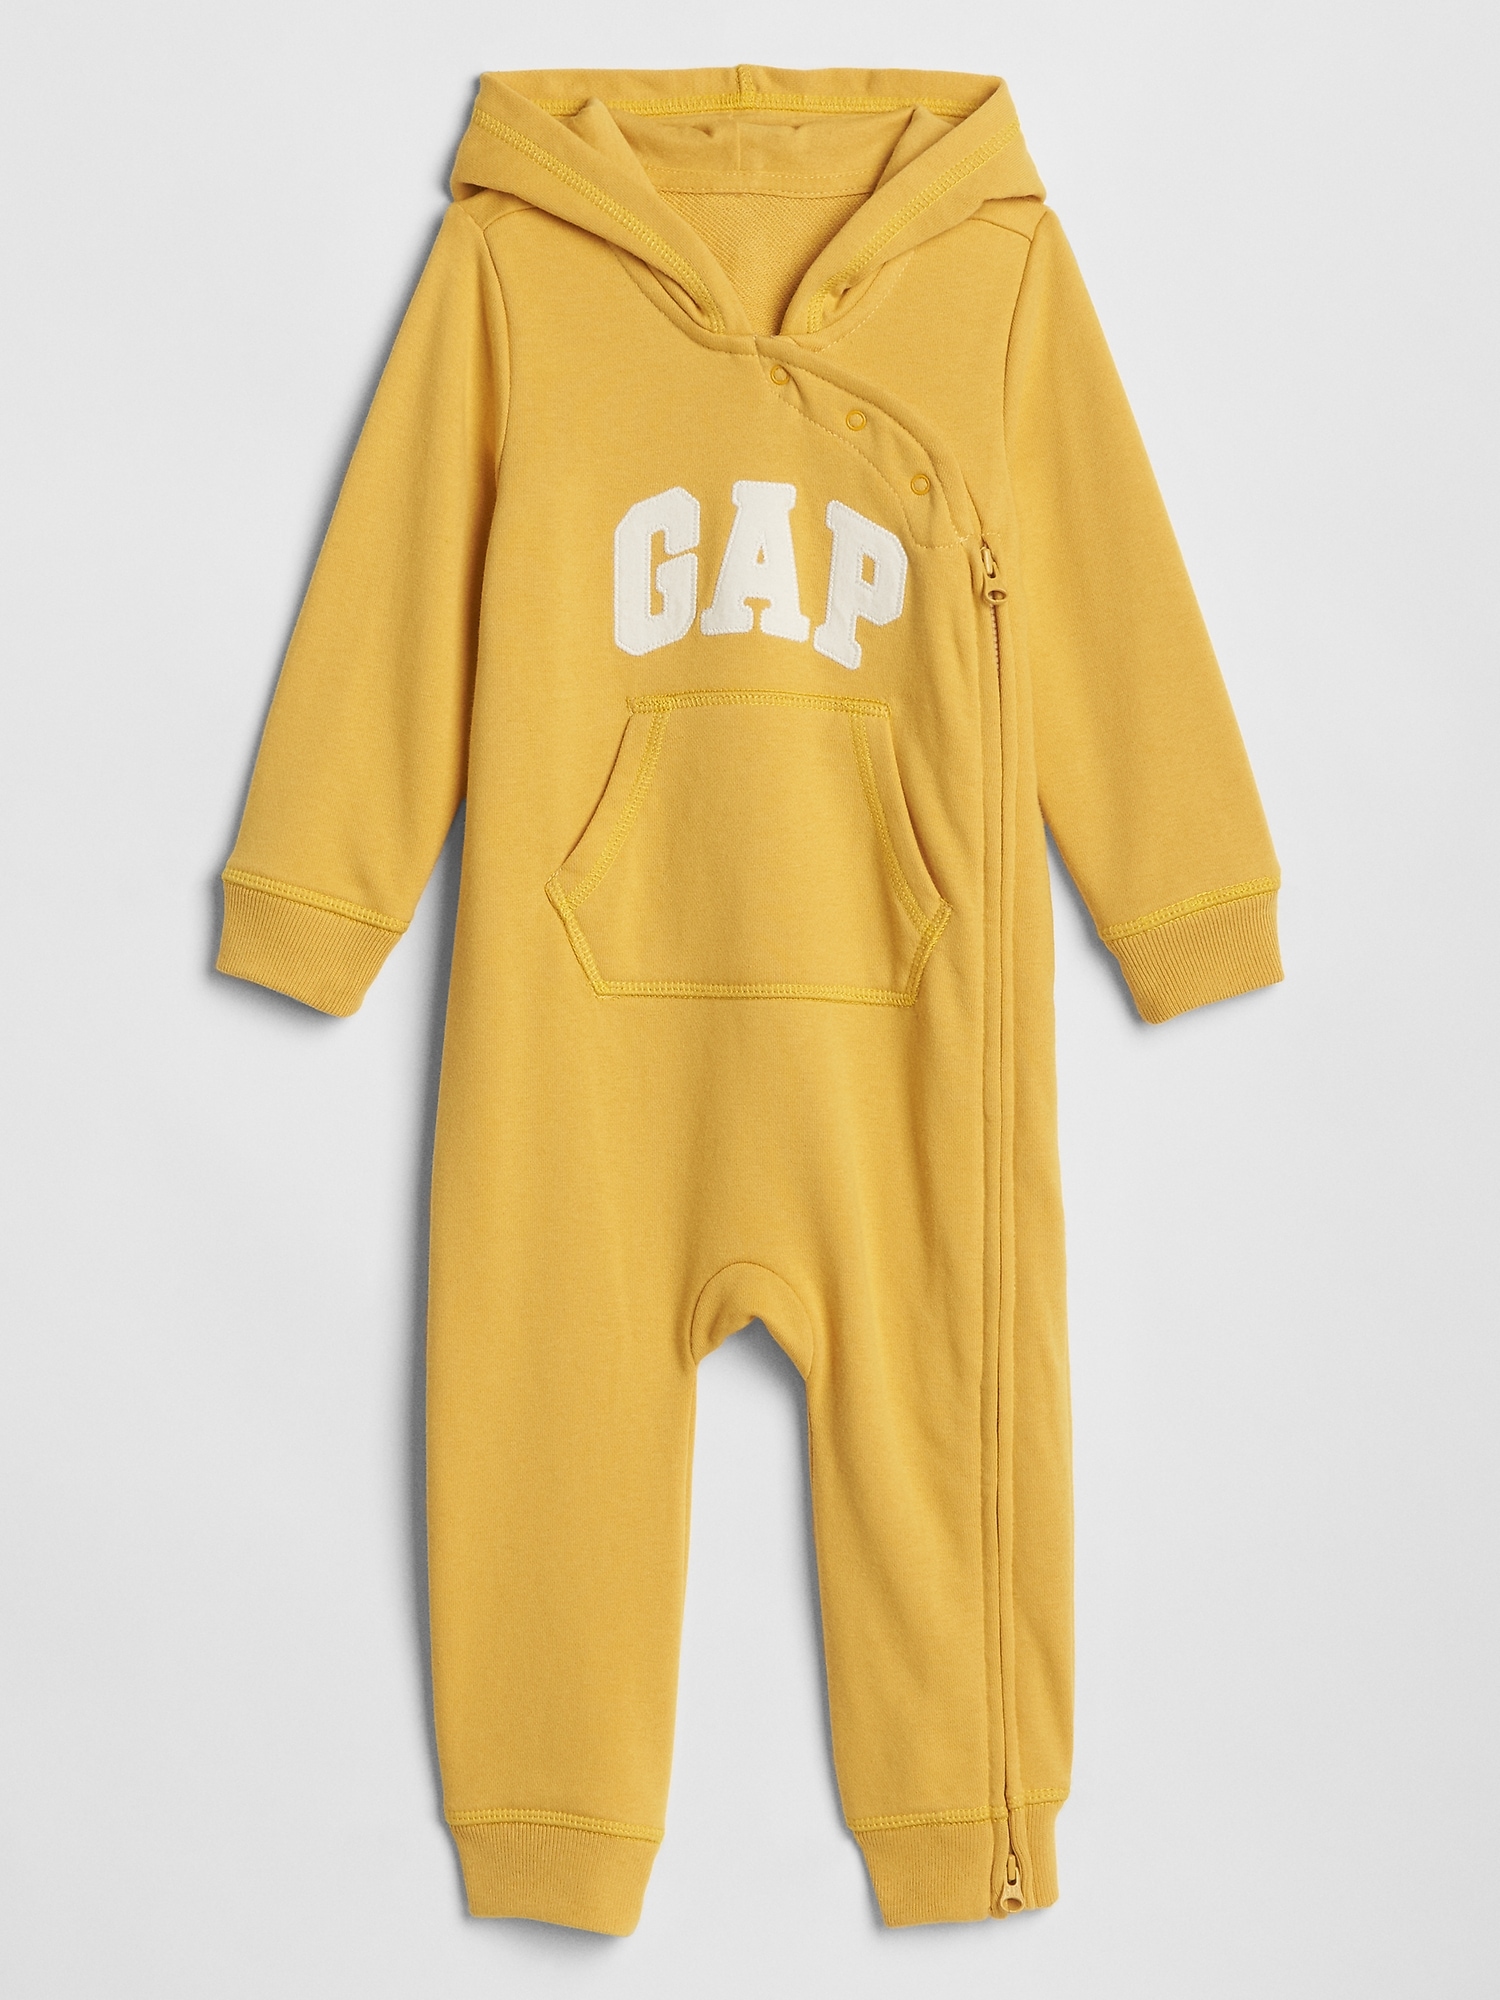 Baby Gap Logo One-Piece | Gap Factory